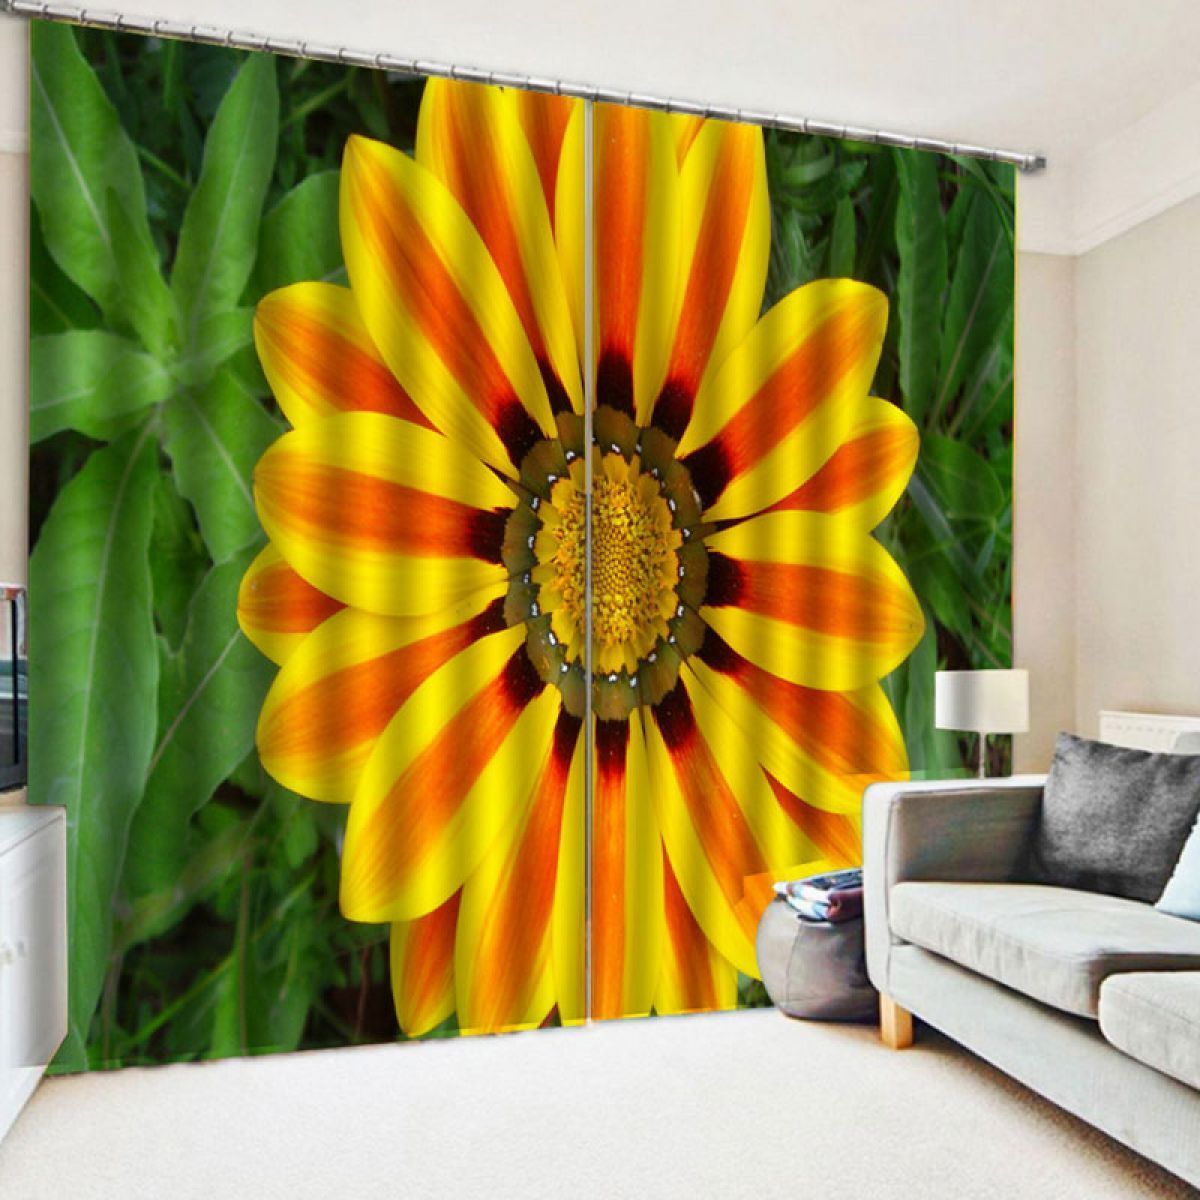 giant sunflower grass printed window curtain home decor 1923